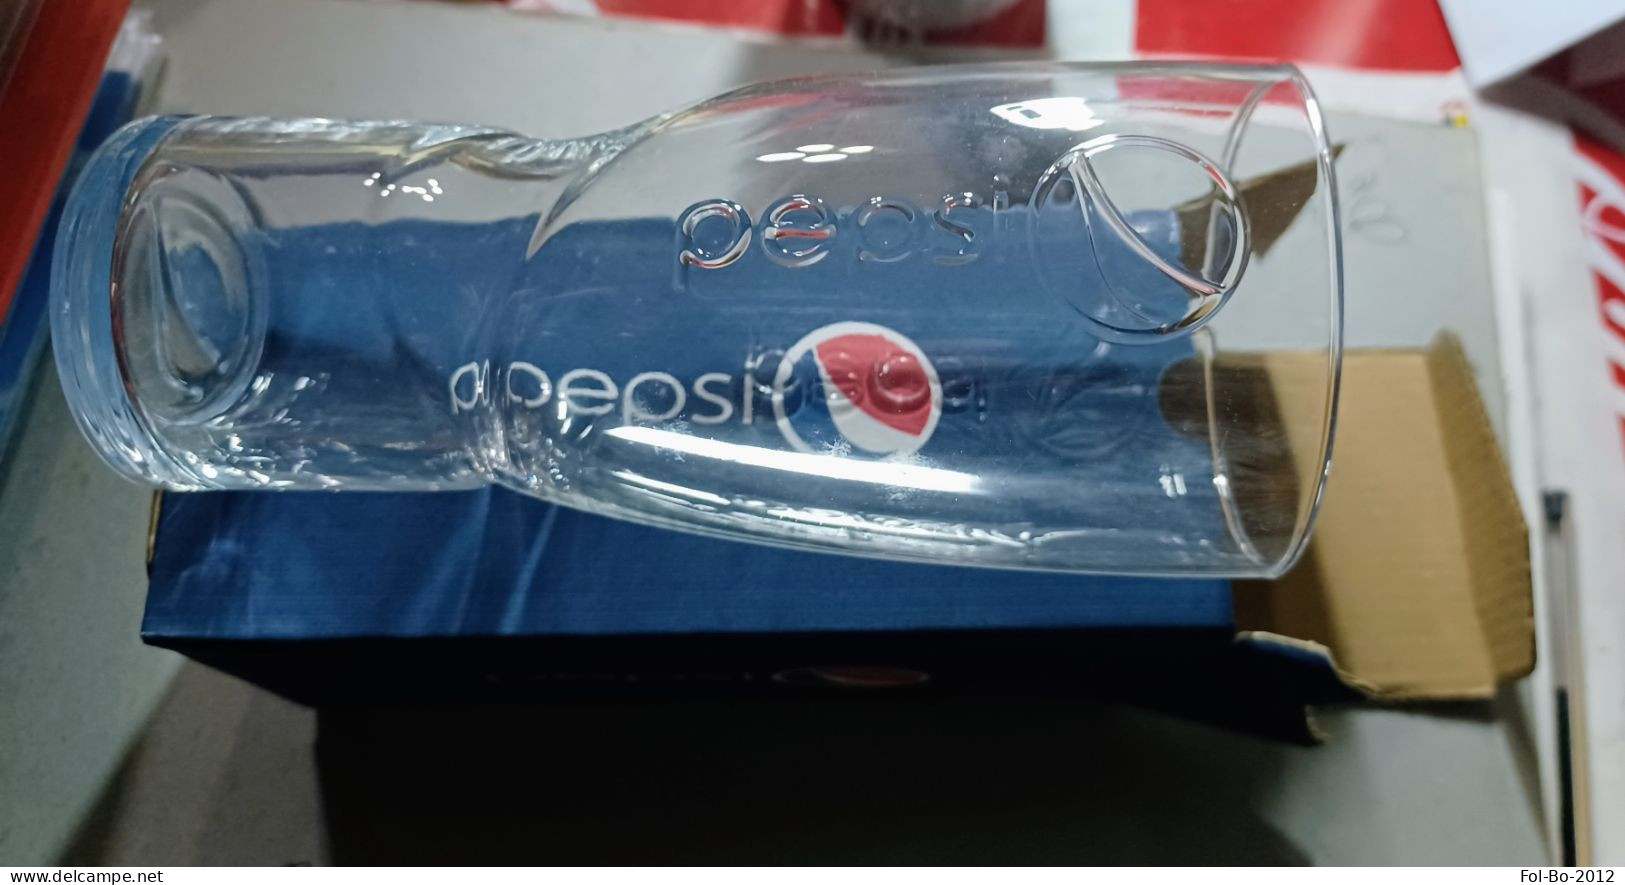 Pepsi Bicchiere Anno 2000. - Tasses, Gobelets, Verres